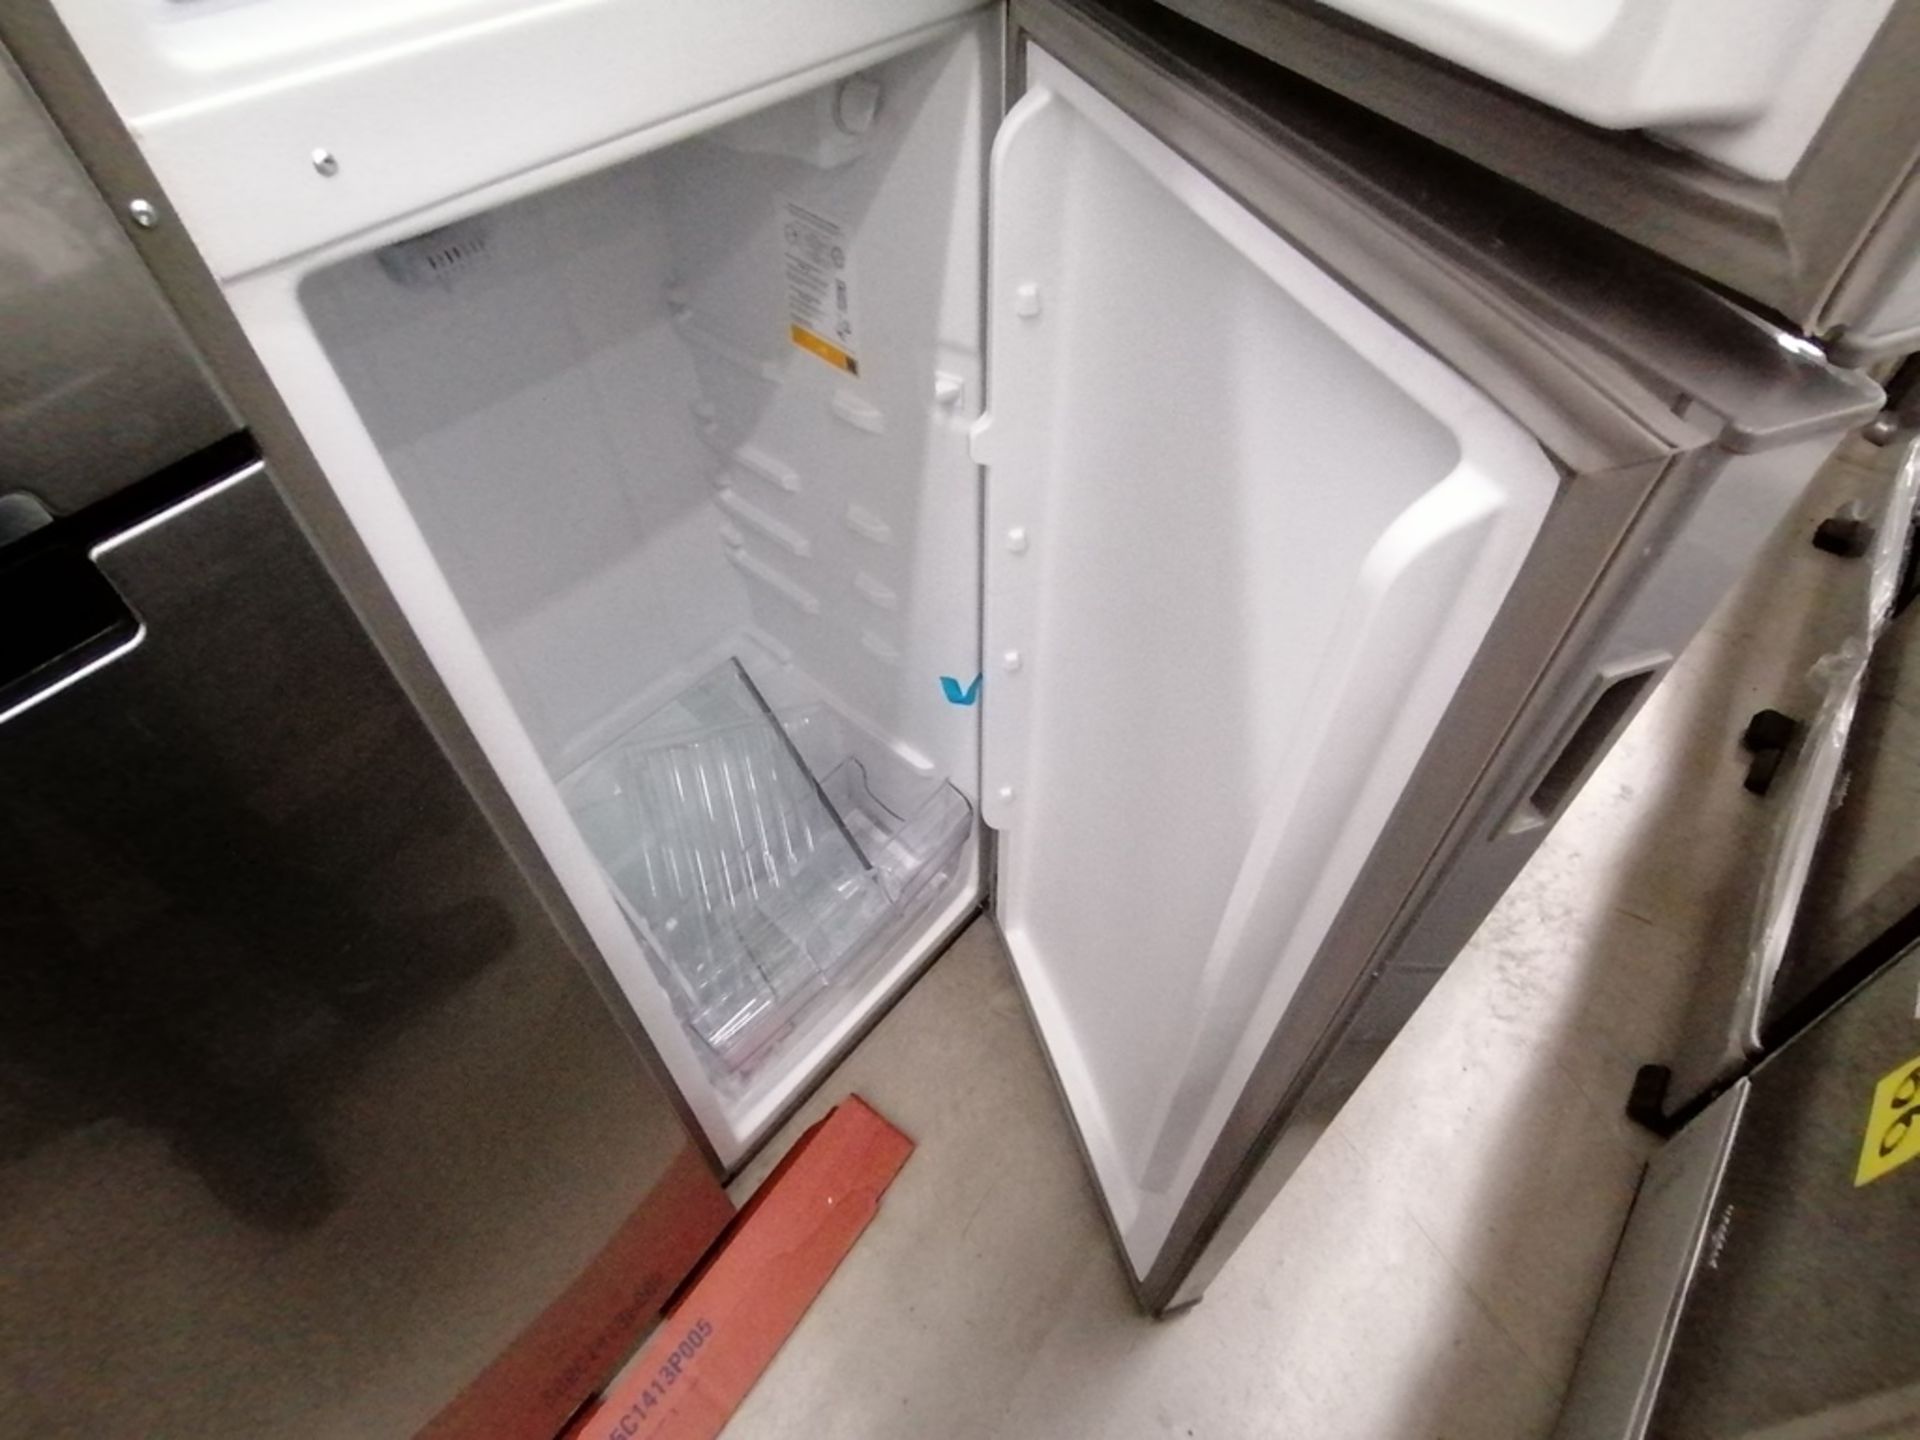 Lote de 2 refrigeradores incluye: 1 Refrigerador, Marca Samsung, Modelo RT29K500JS8, Serie 0AZS4BAR - Image 15 of 16